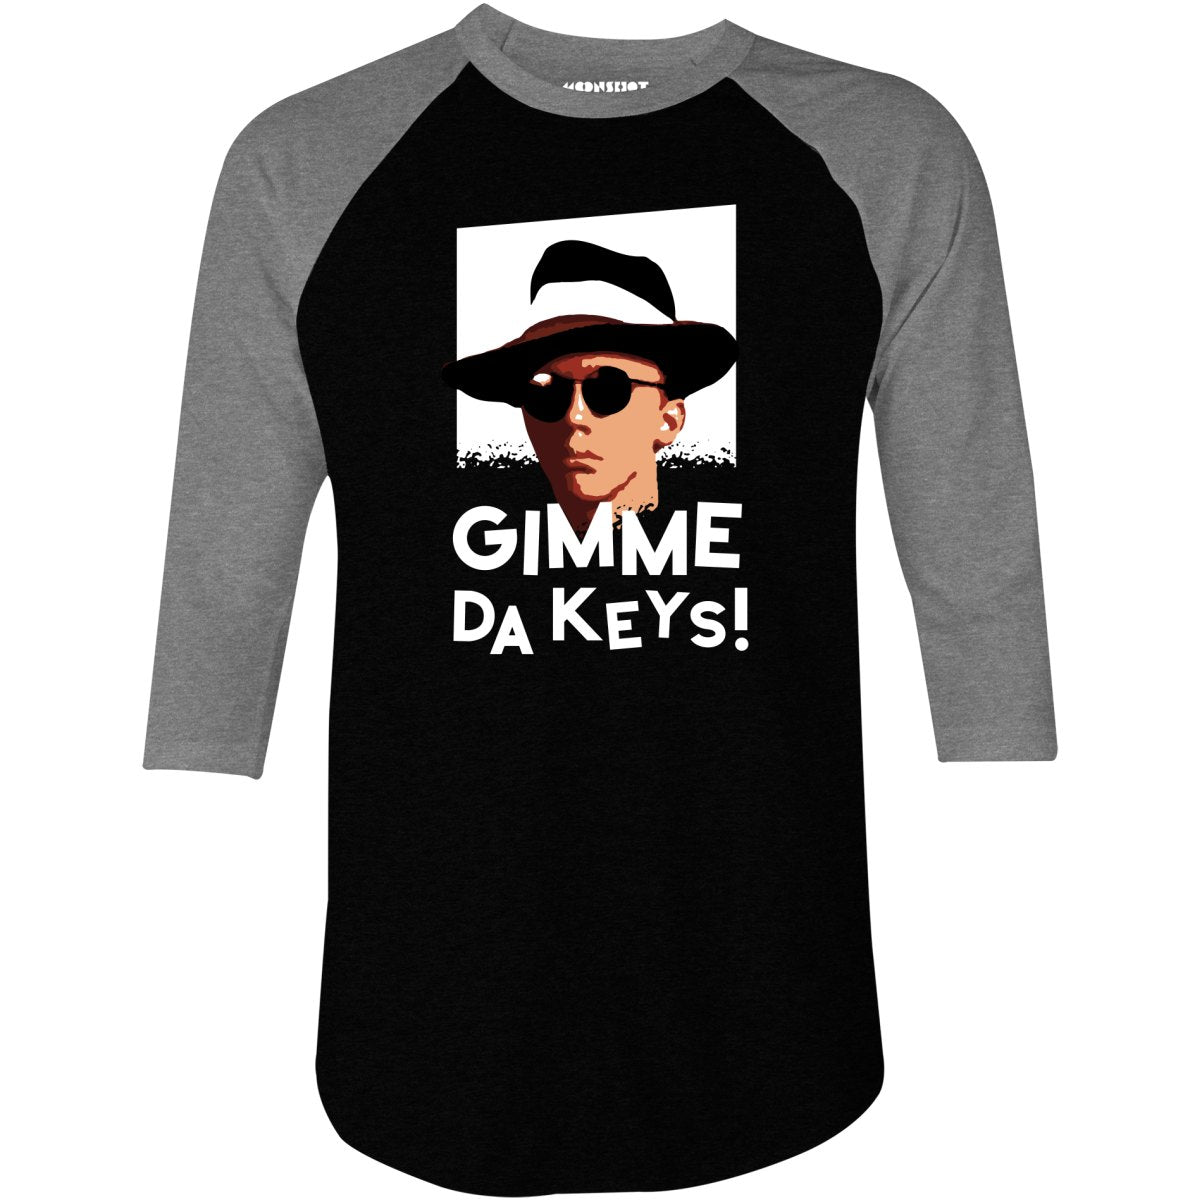 Gimme Da Keys! - 3/4 Sleeve Raglan T-Shirt